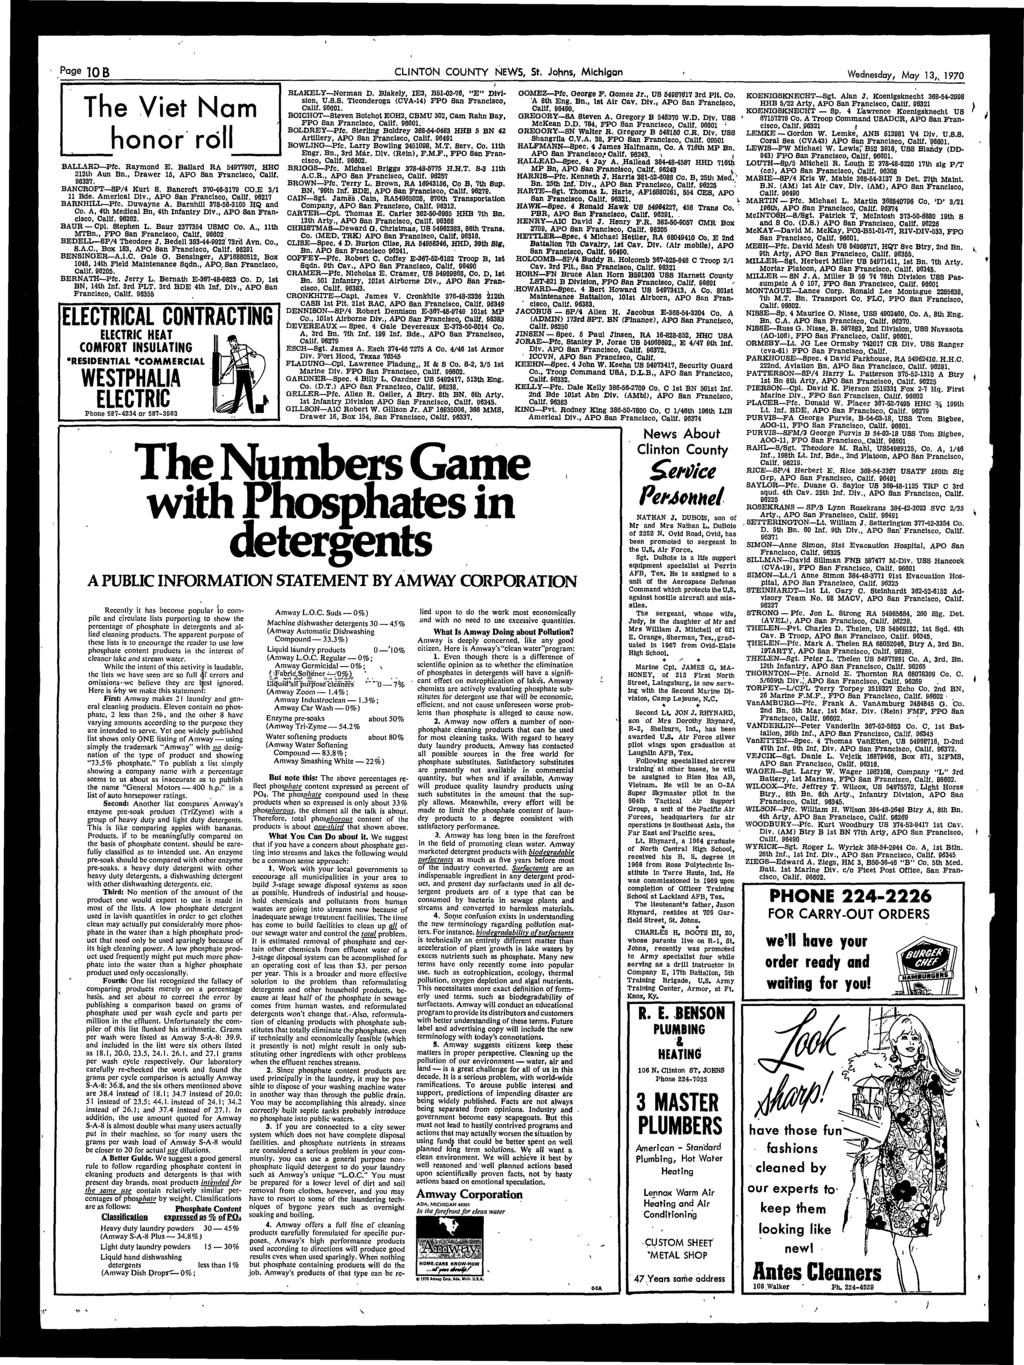 Page B CLINTON COUNTY NEWS, St. Johns, Michigan Wednesday, May, v 1970 The Viet Nam h onor ro BALLARD Pfc, Raymond E. Ballard RA 54977907, HHO 212th Aun Bn., Drawer 15, APO San Francisco, Calif.